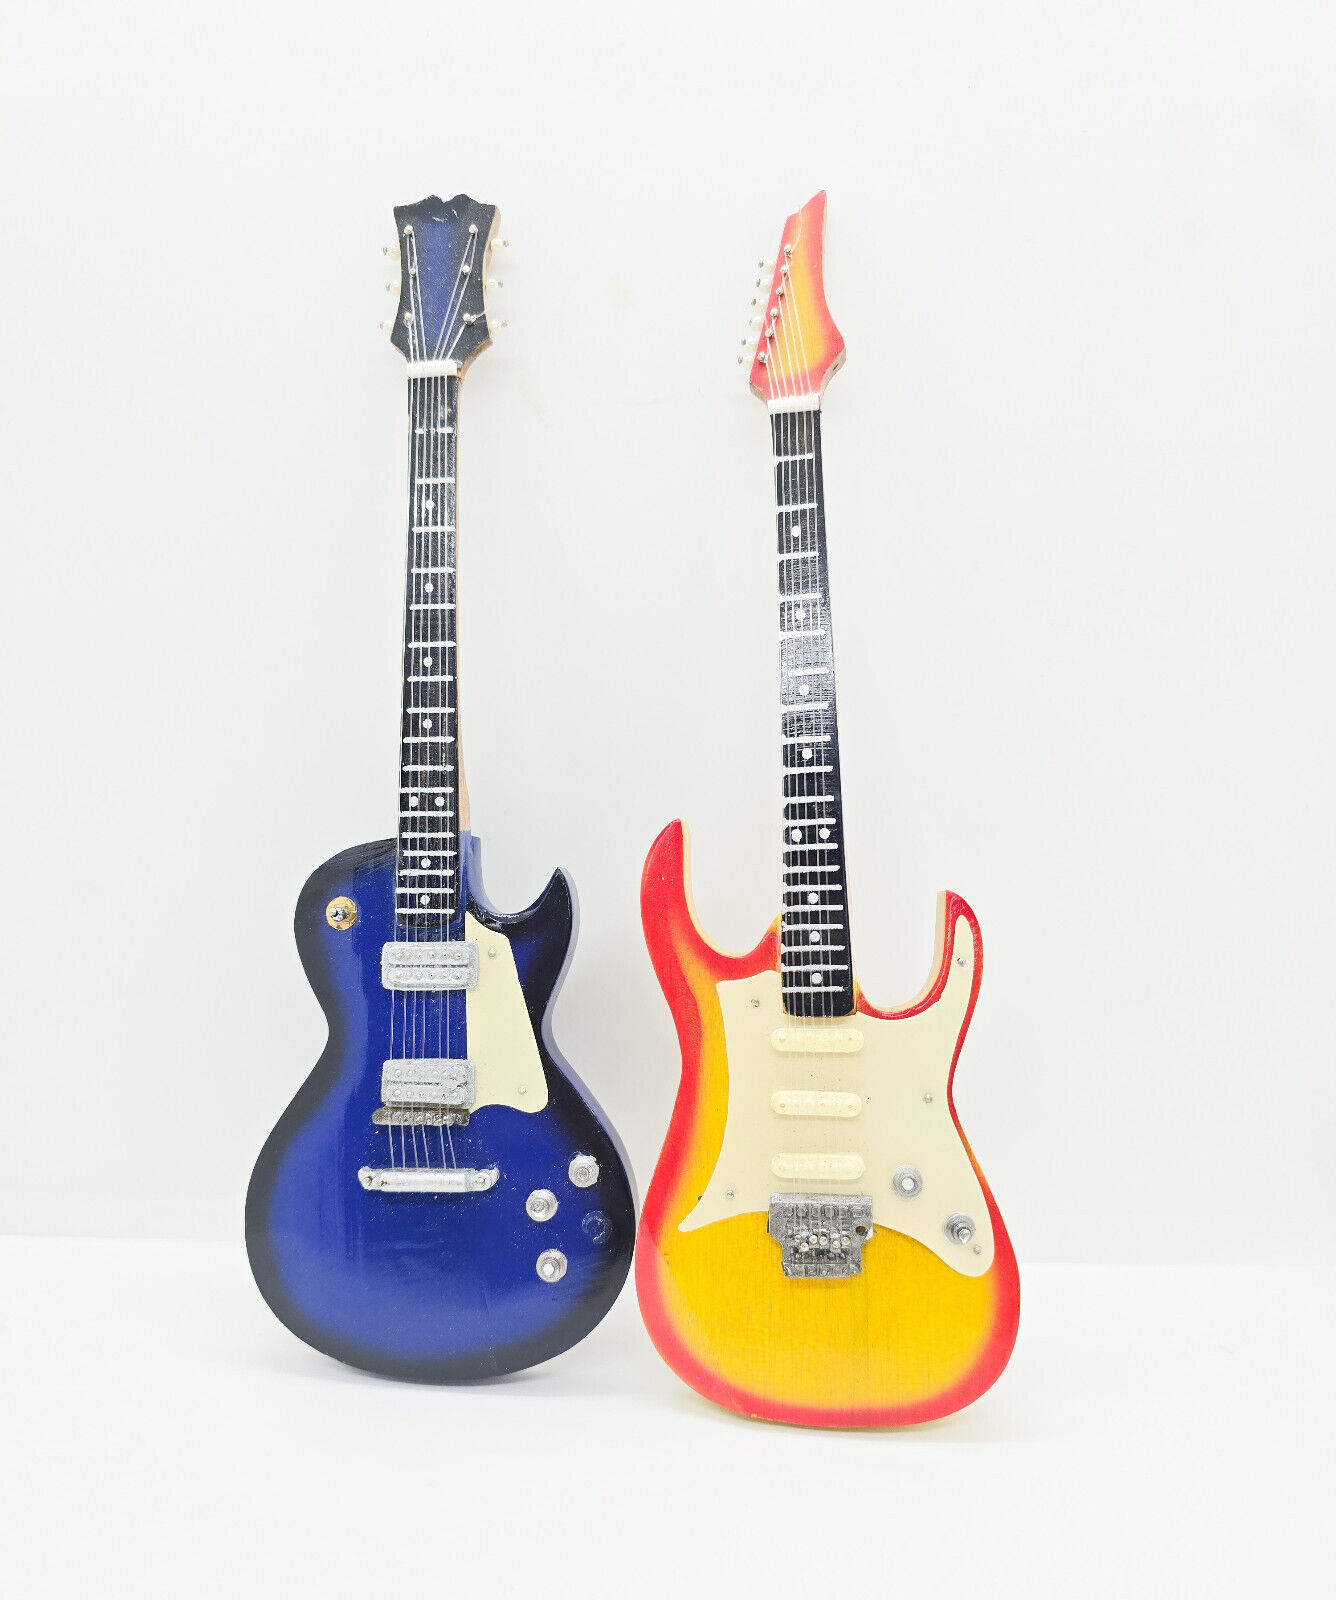 2 Miniature Electric Guitar Model Gibson(blue) & Ibanez(yellow) Stye Figure 9.5\